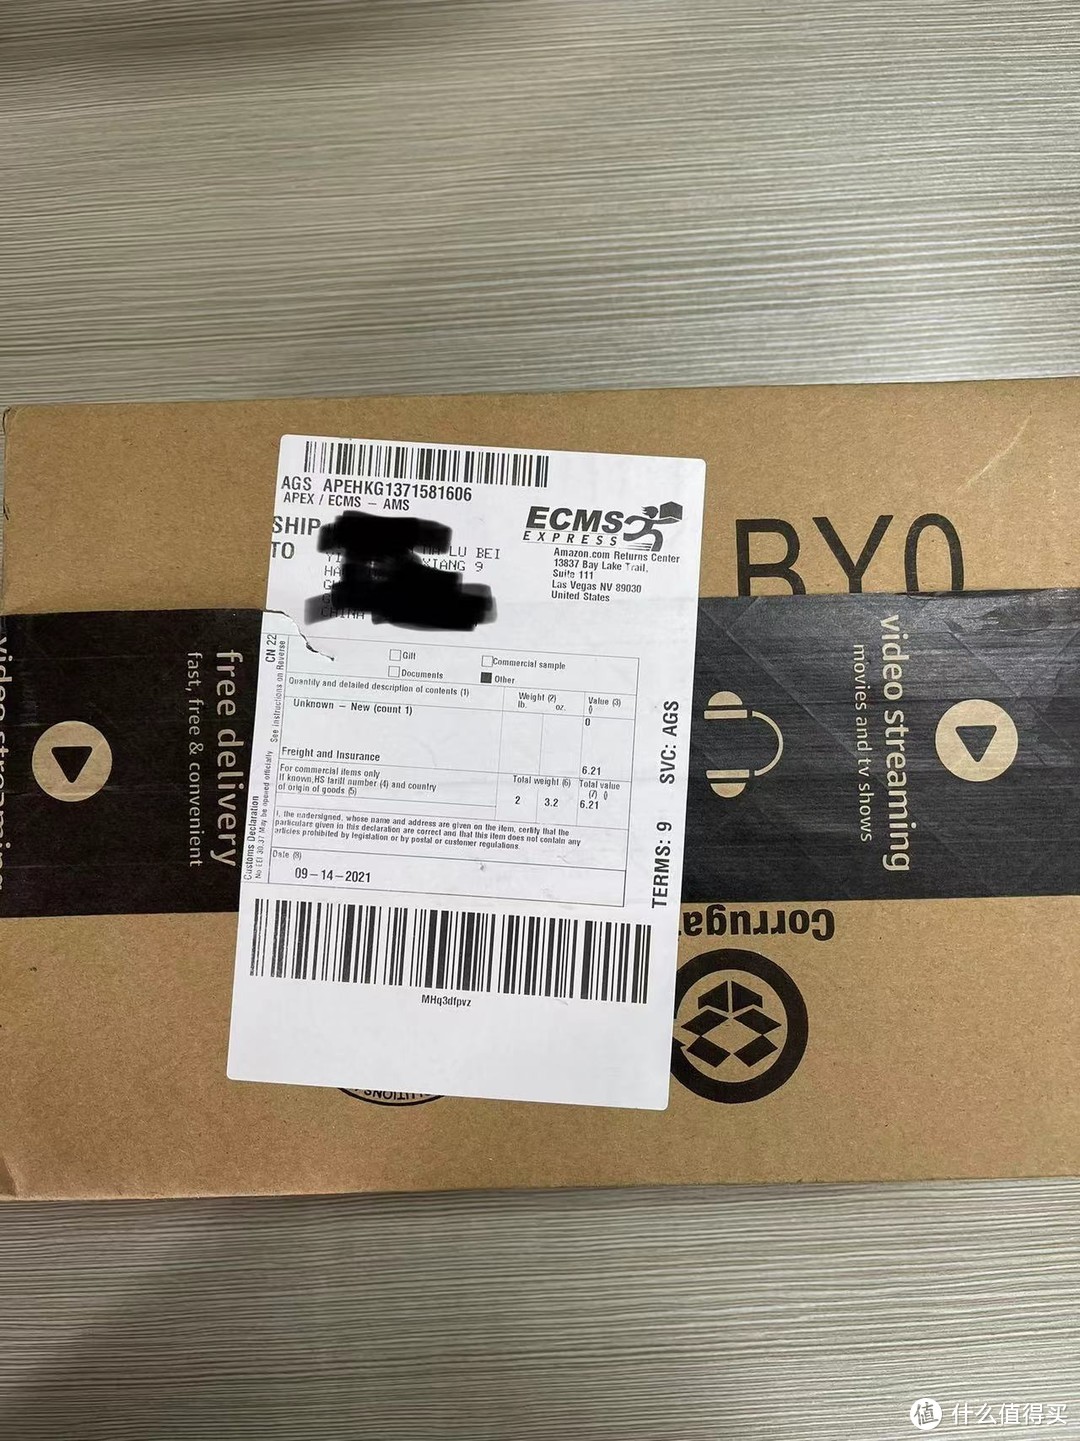 Amazon的盒子